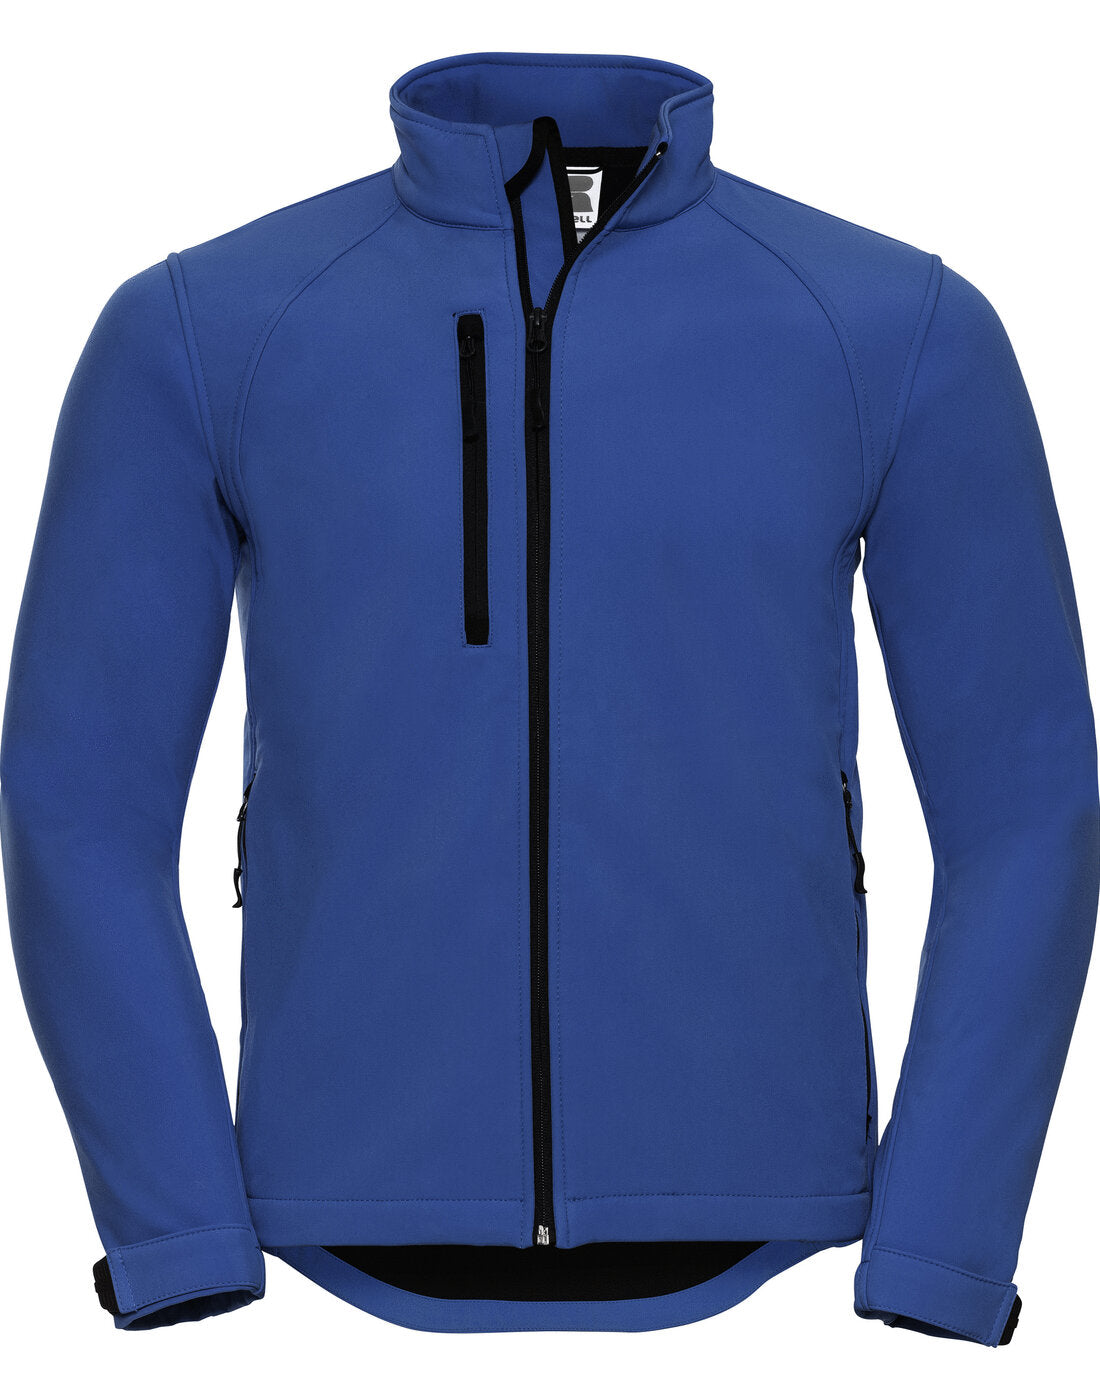 Russell Mens Softshell Jacket - Azure Blue